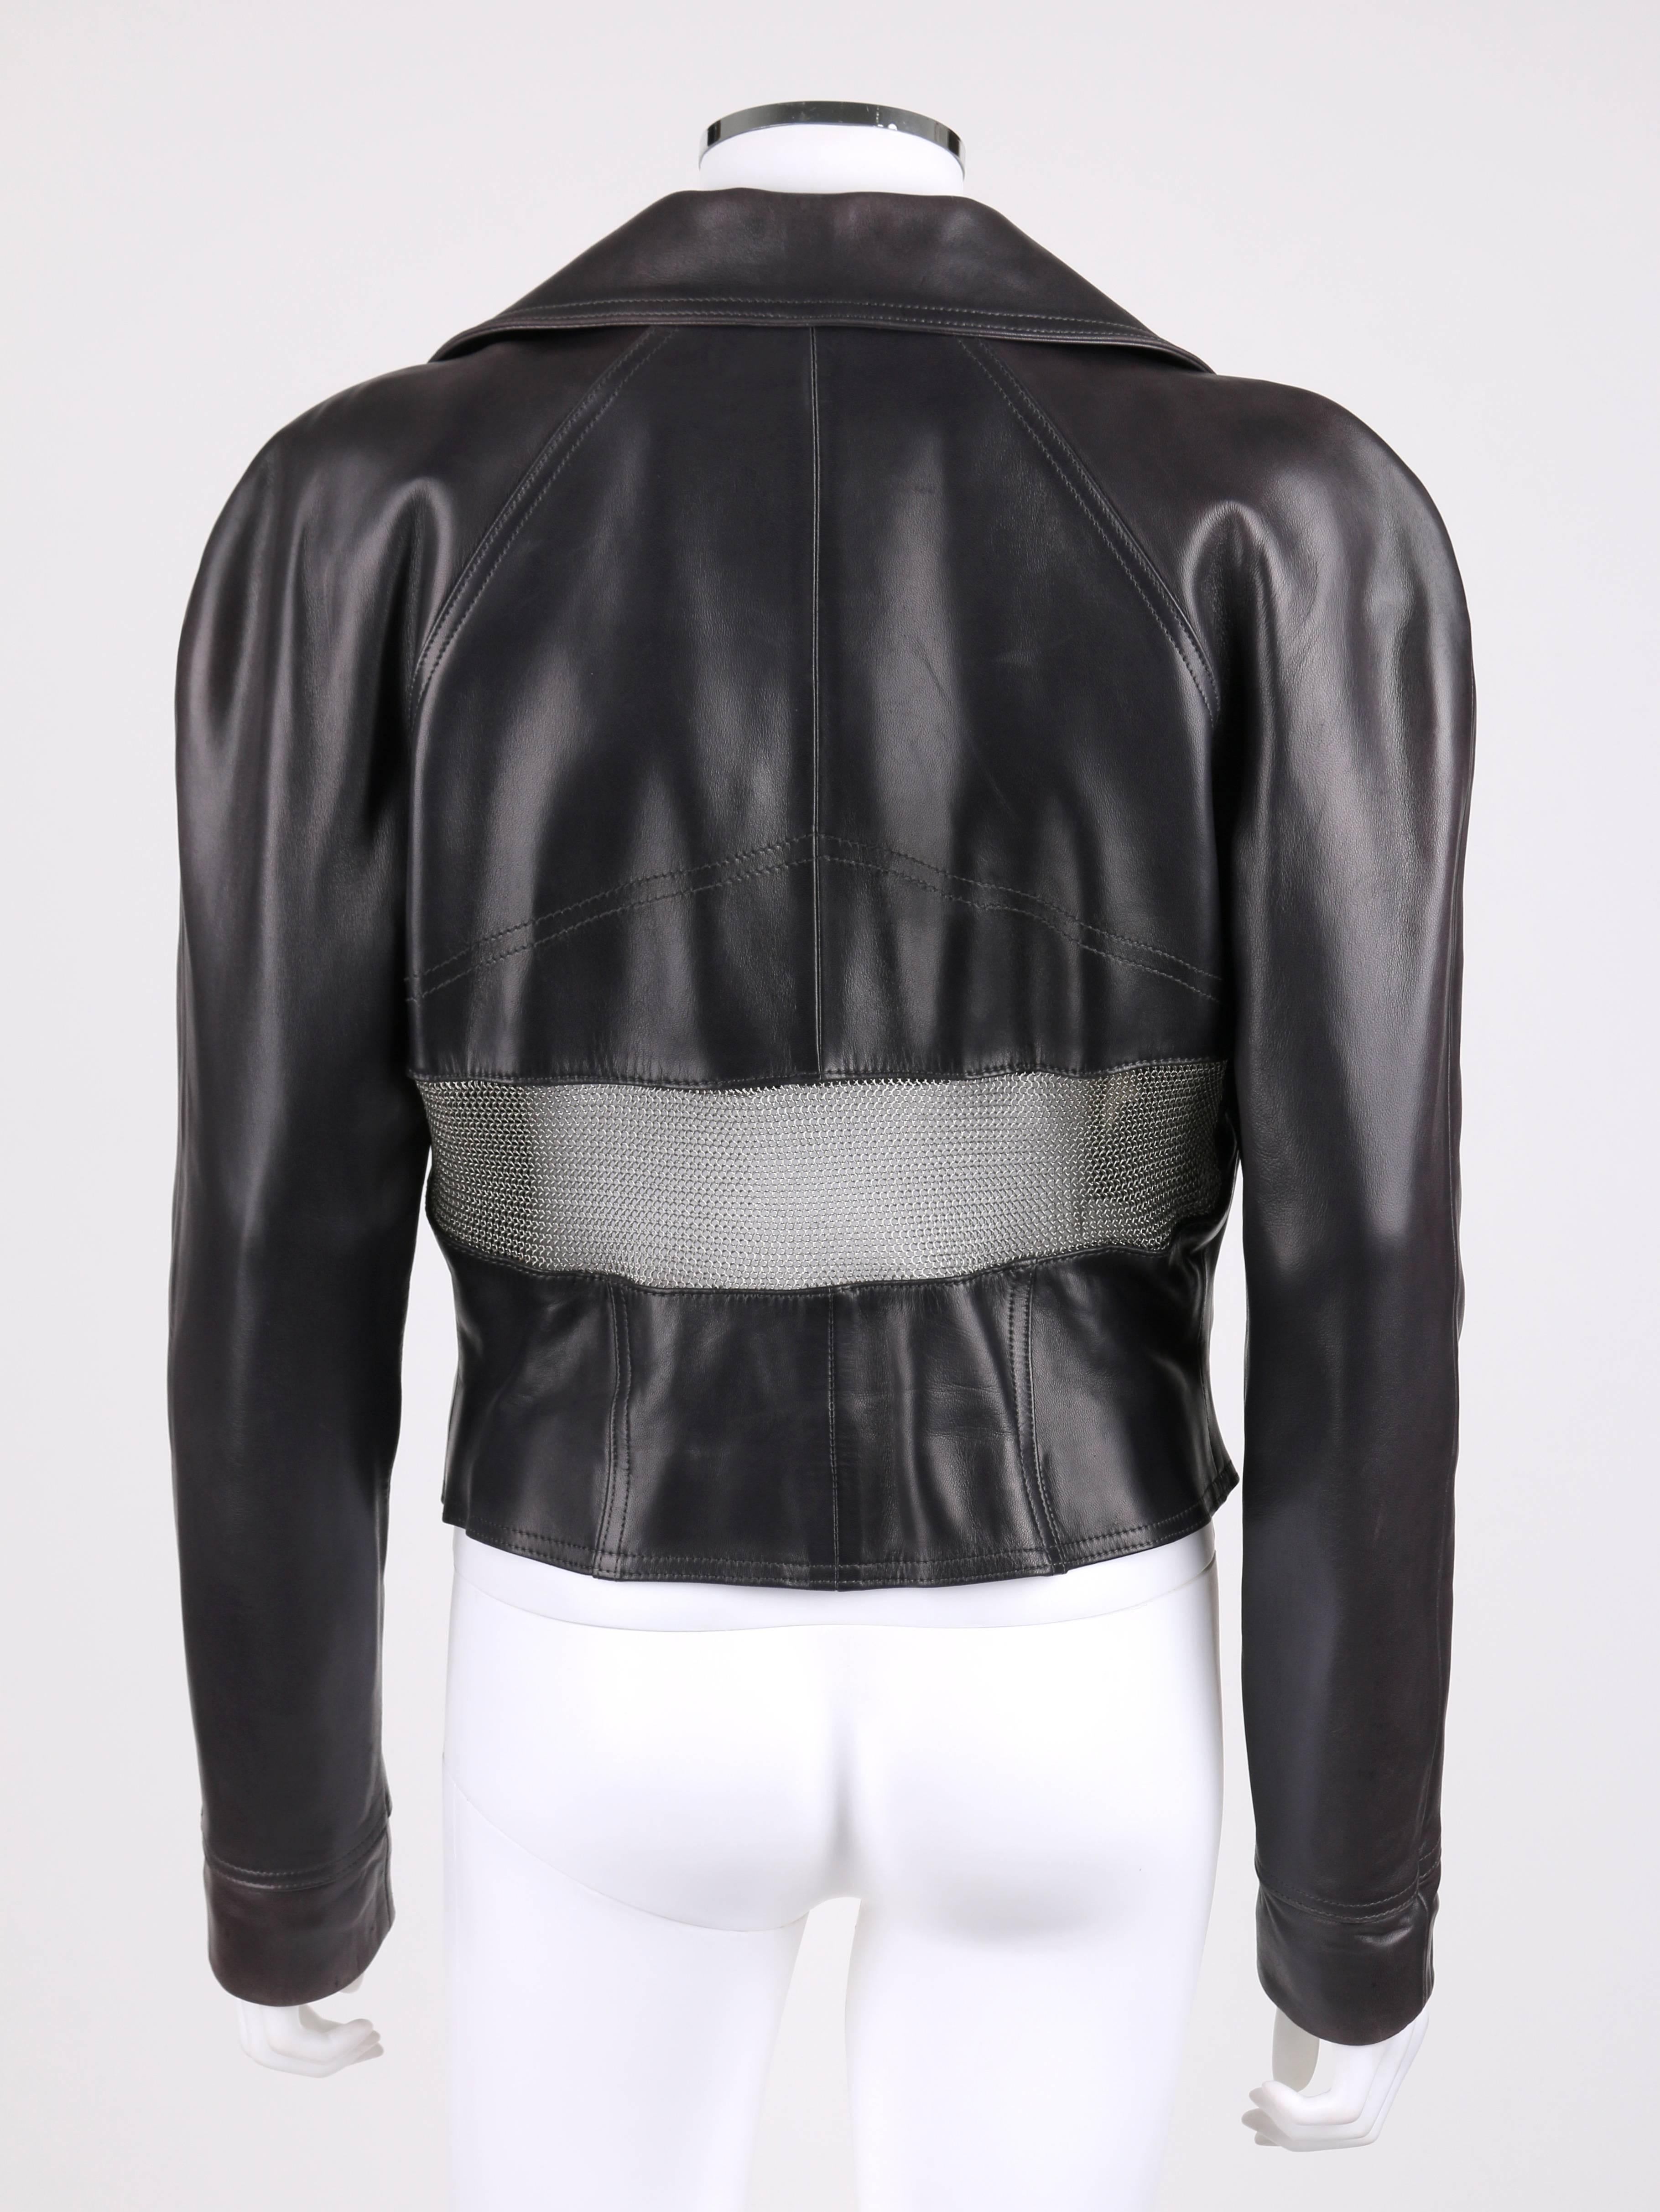 jean claude jitrois leather jacket